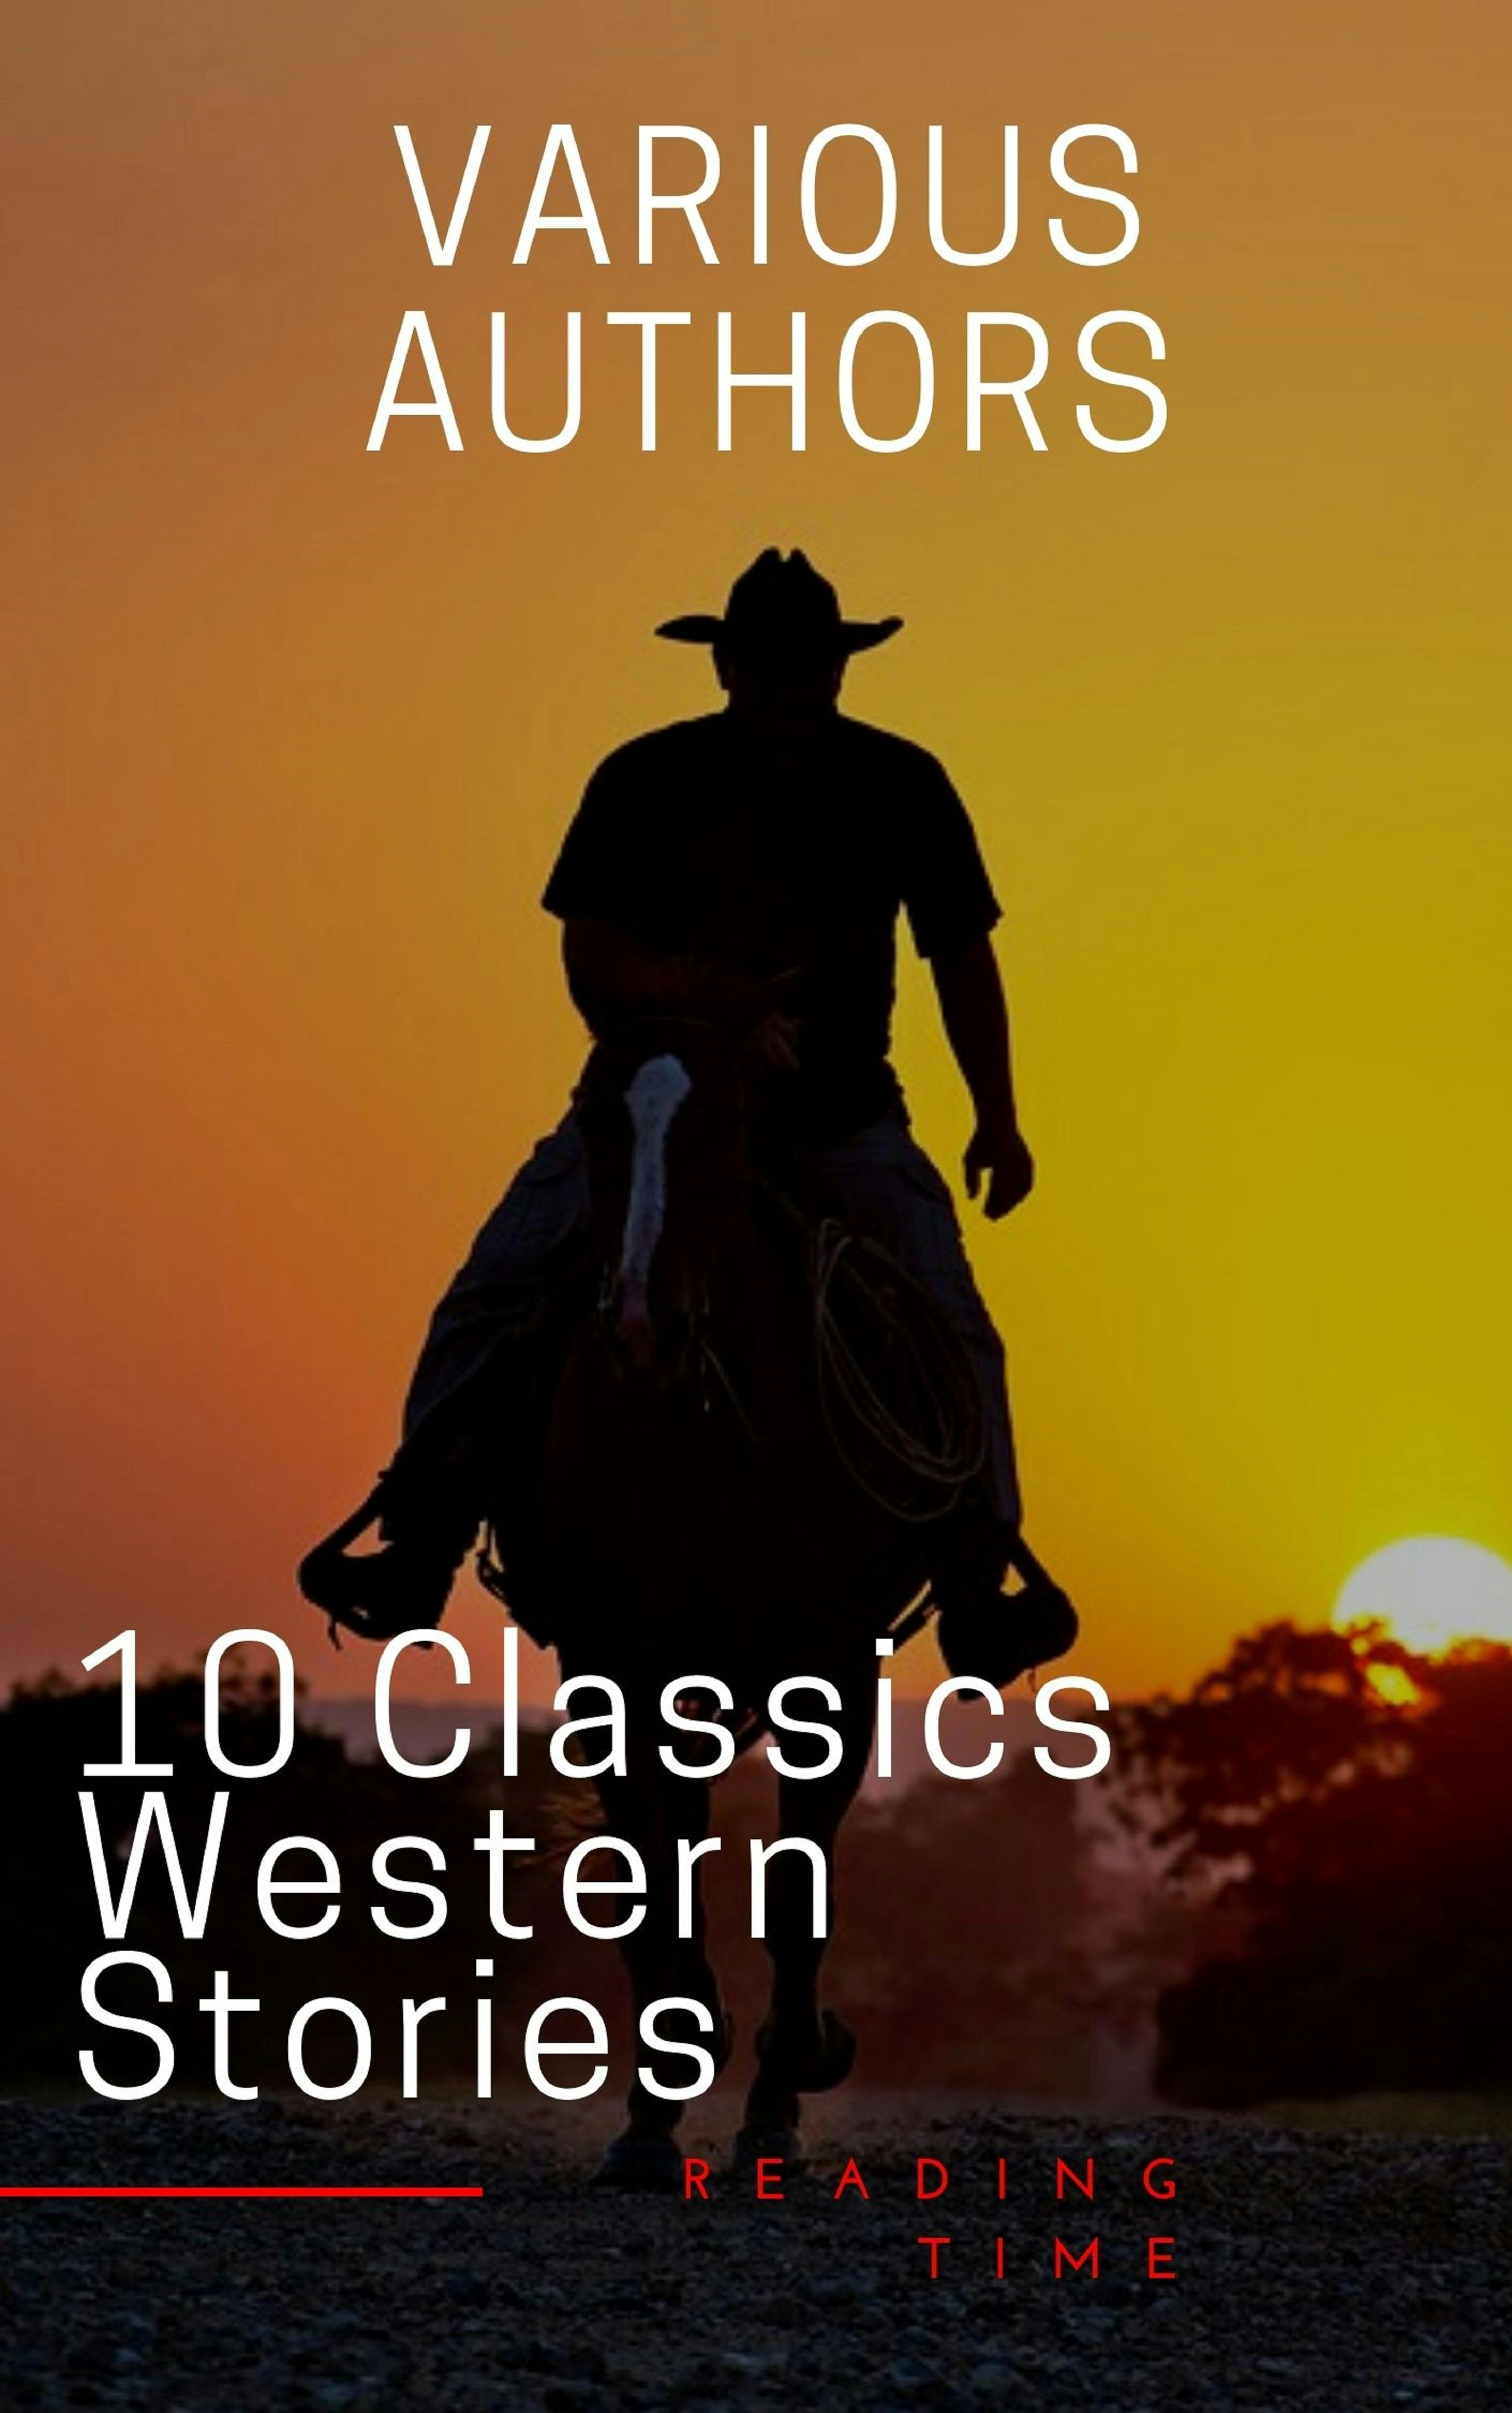 10 Classics Western Stories - B.M. Bower, Andy Adams, James Fenimore Cooper, Reading Time, Dane Coolidge, Bret Harte, Washington Irving, Marah Ellis Ryan, Samuel Merwin, Frederic Homer Balch